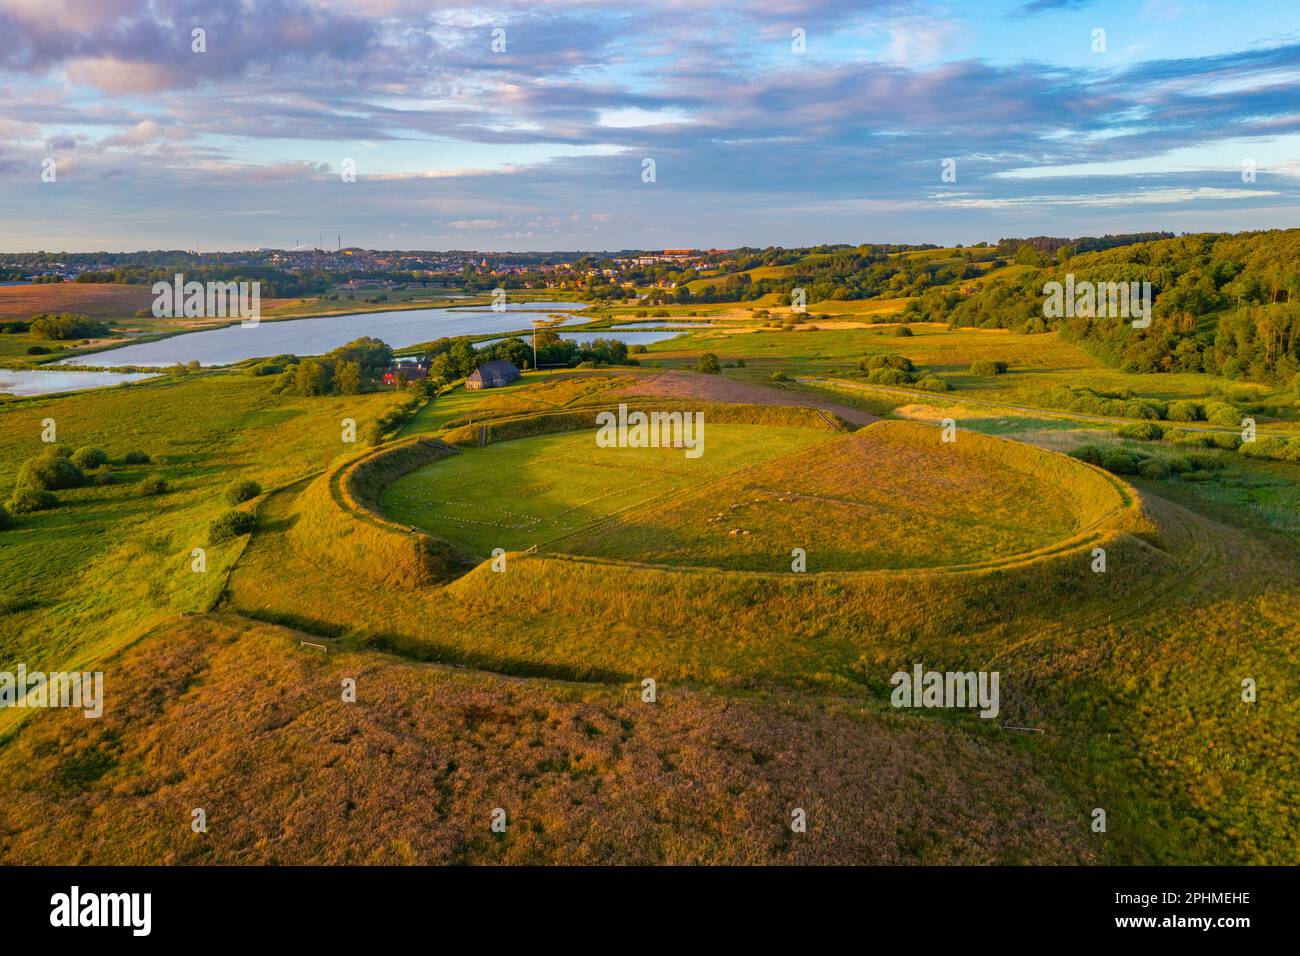 Fyrkat viking ring fortress in Denmark. Stock Photo